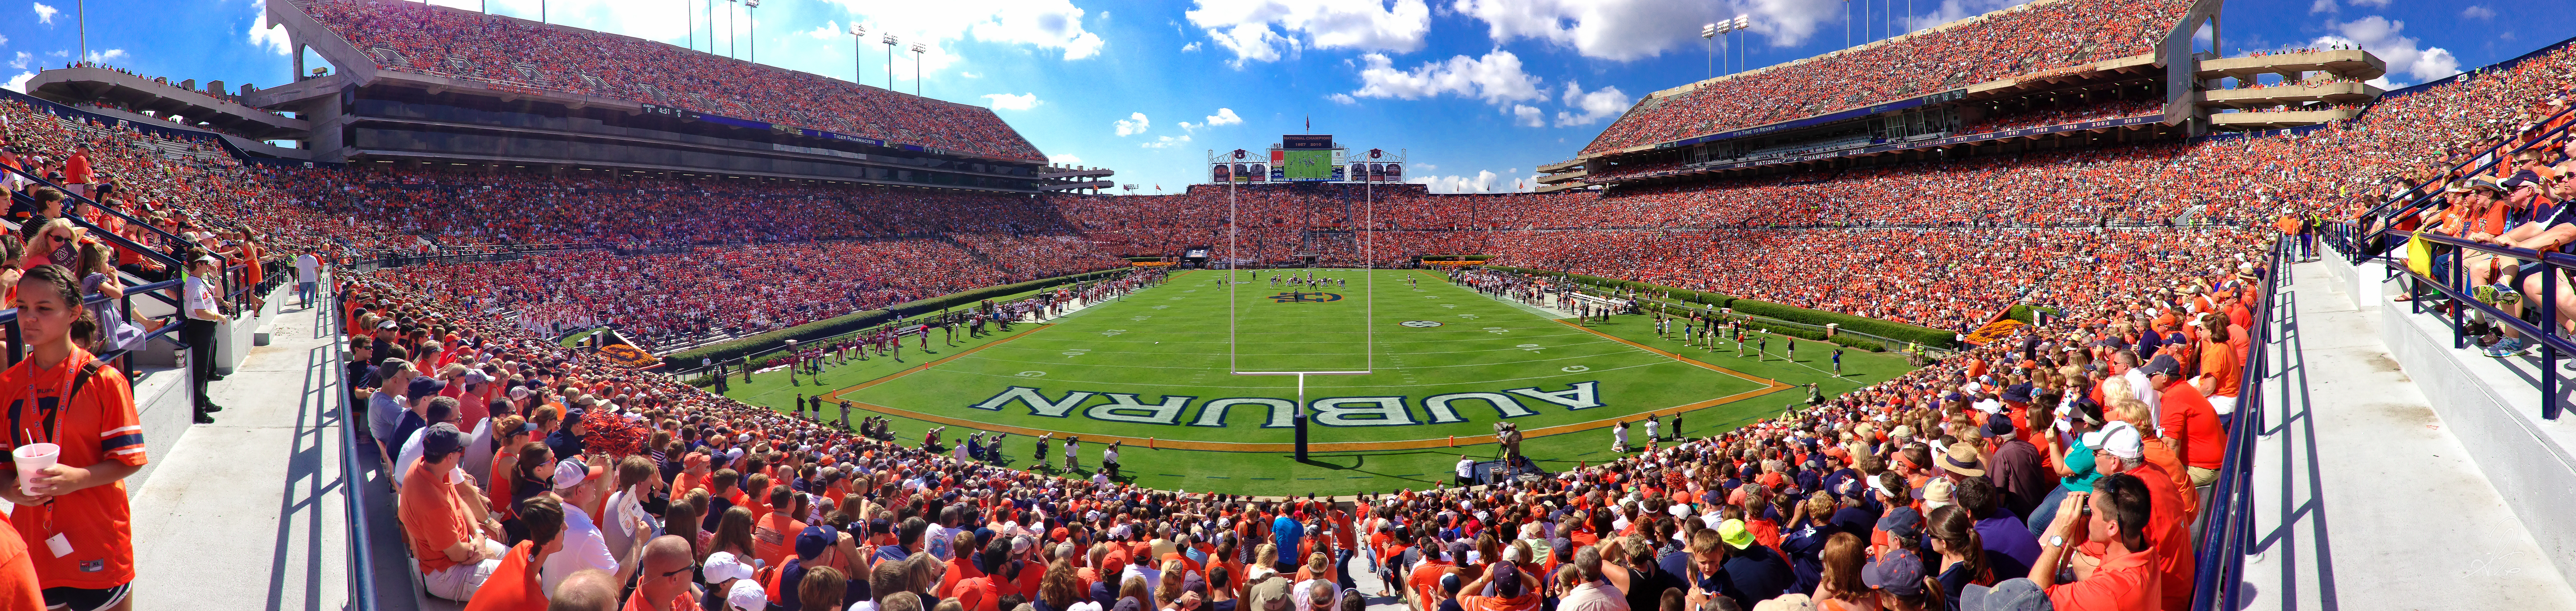 iOS Panorama Beauty of Auburn’s Jordan-Hare Stadium